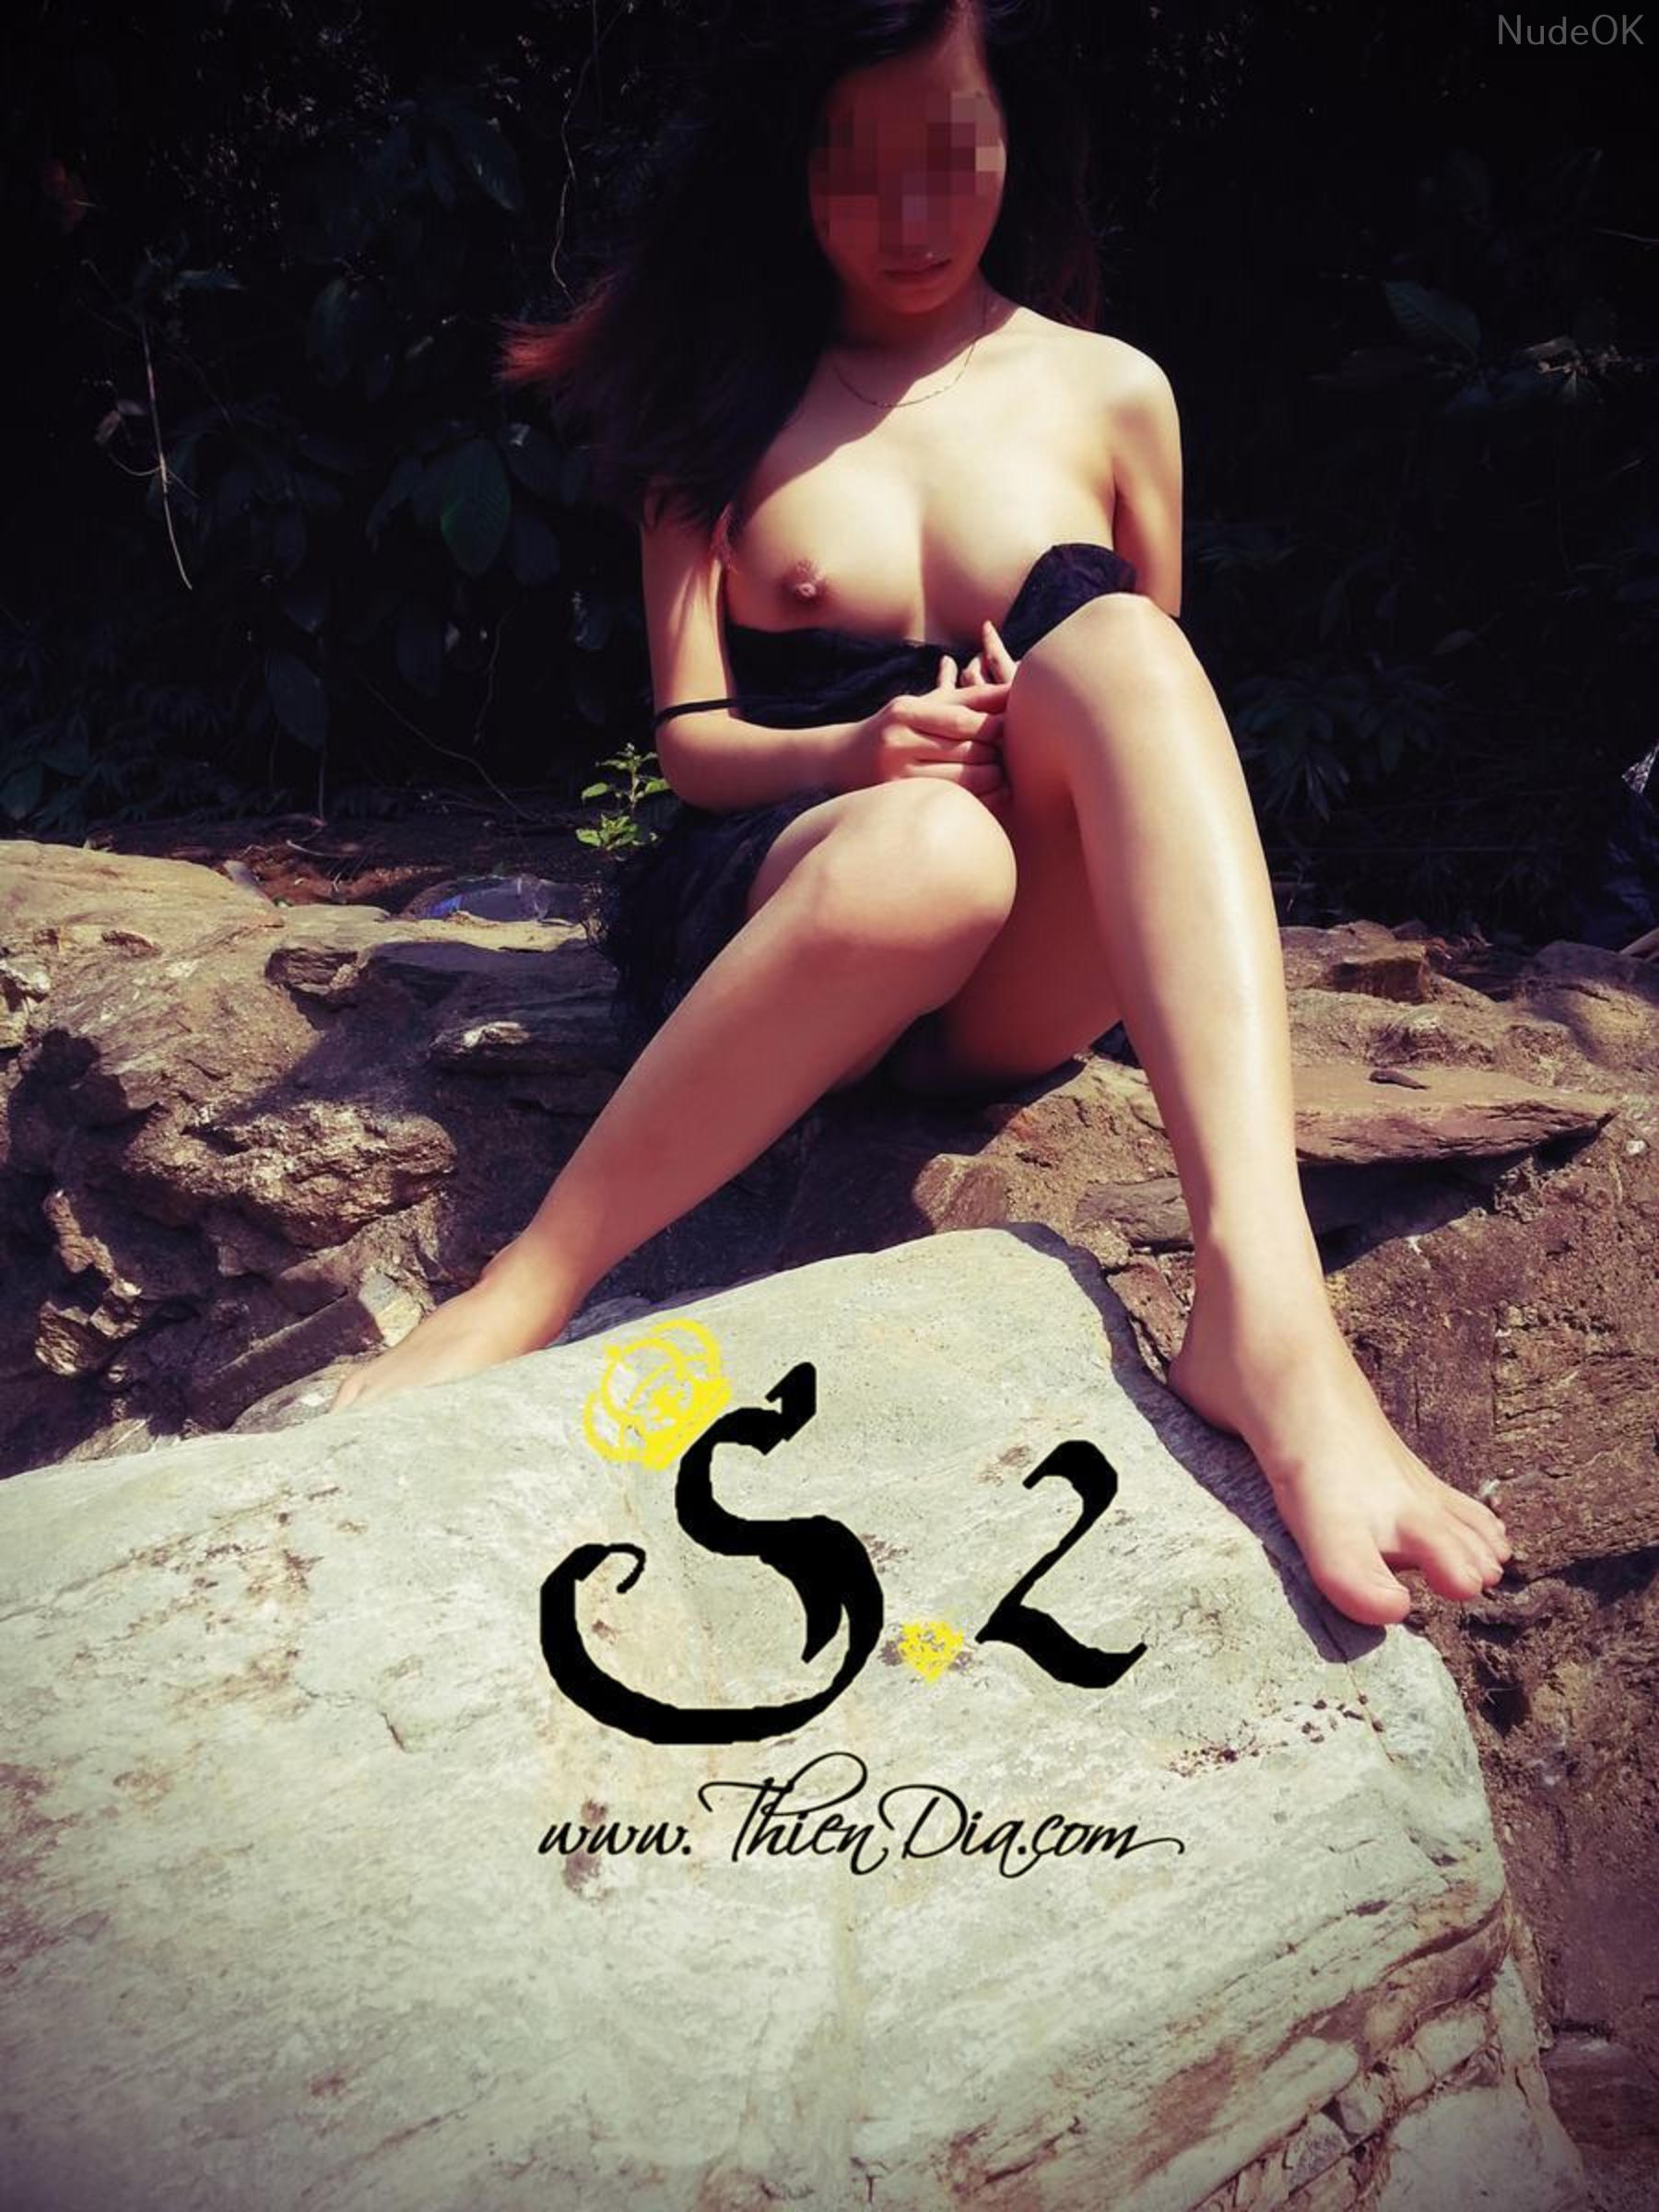 NudeOK.Com - fille asiatique sexy - Nue - Photos de masturbation